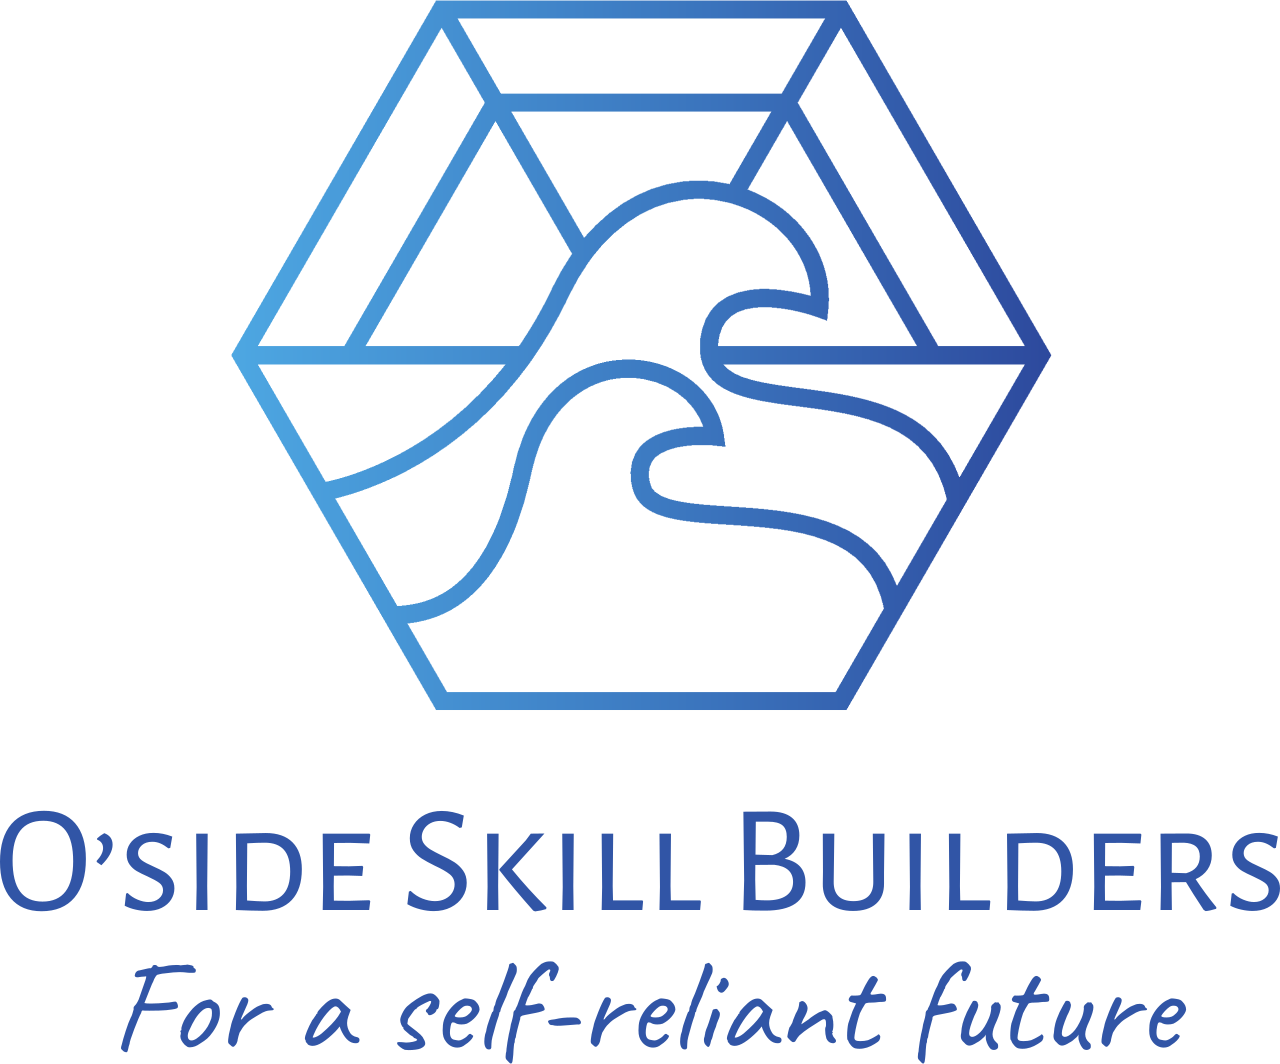 O’side Skill Builders's logo